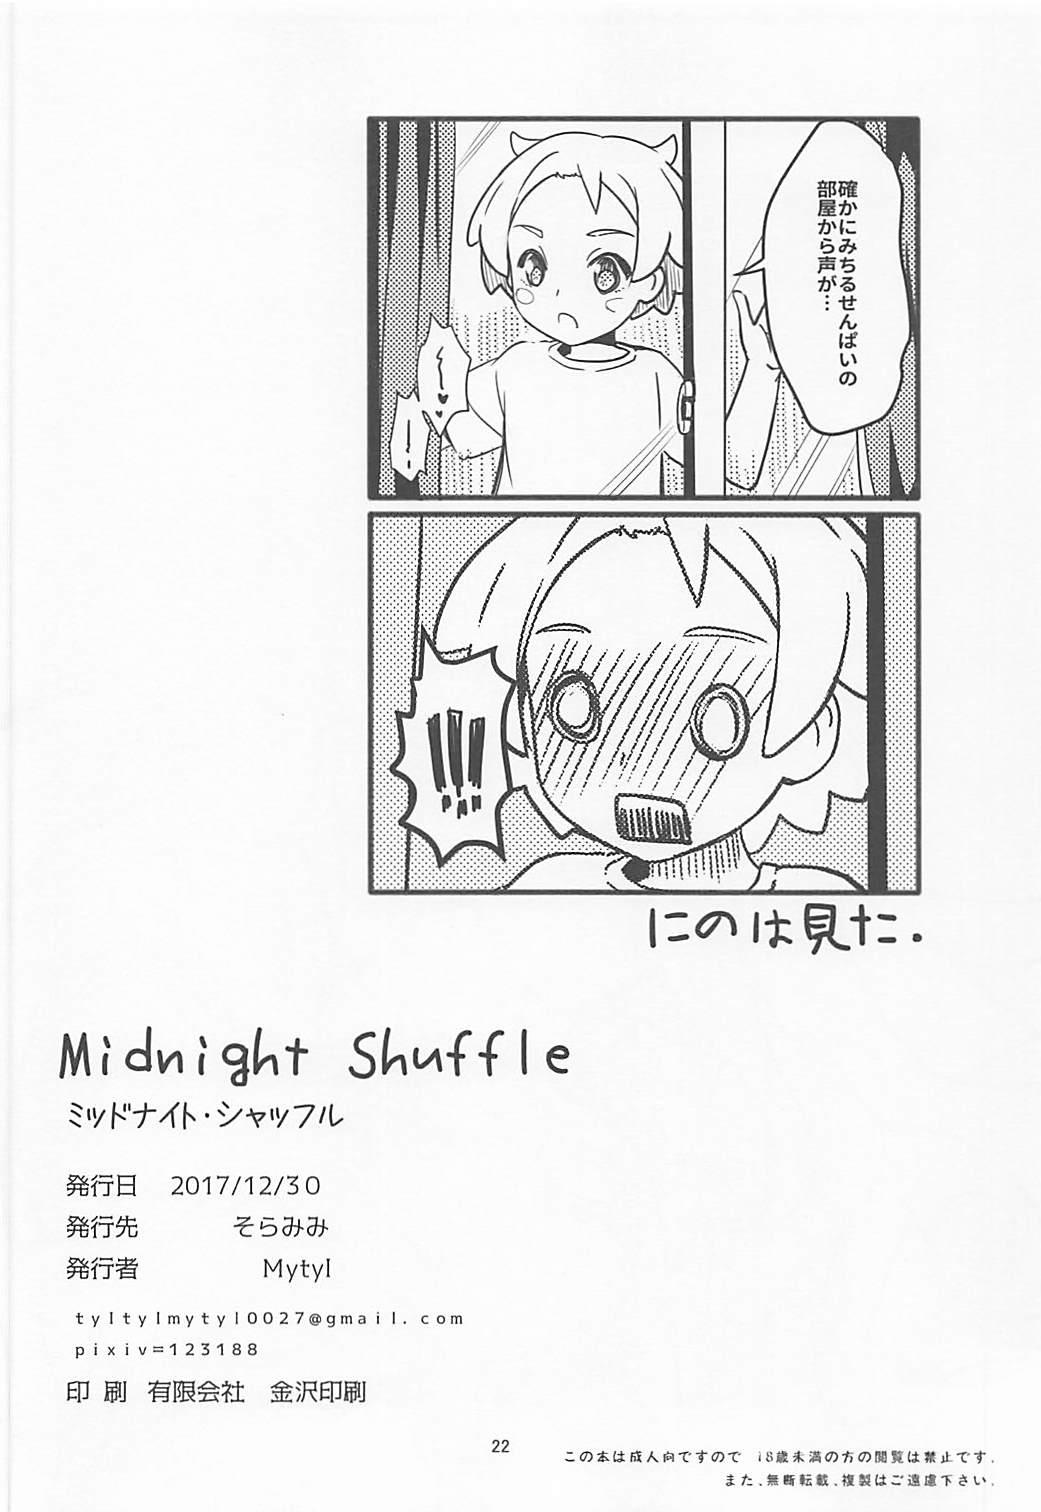 Midnight Shuffle 20